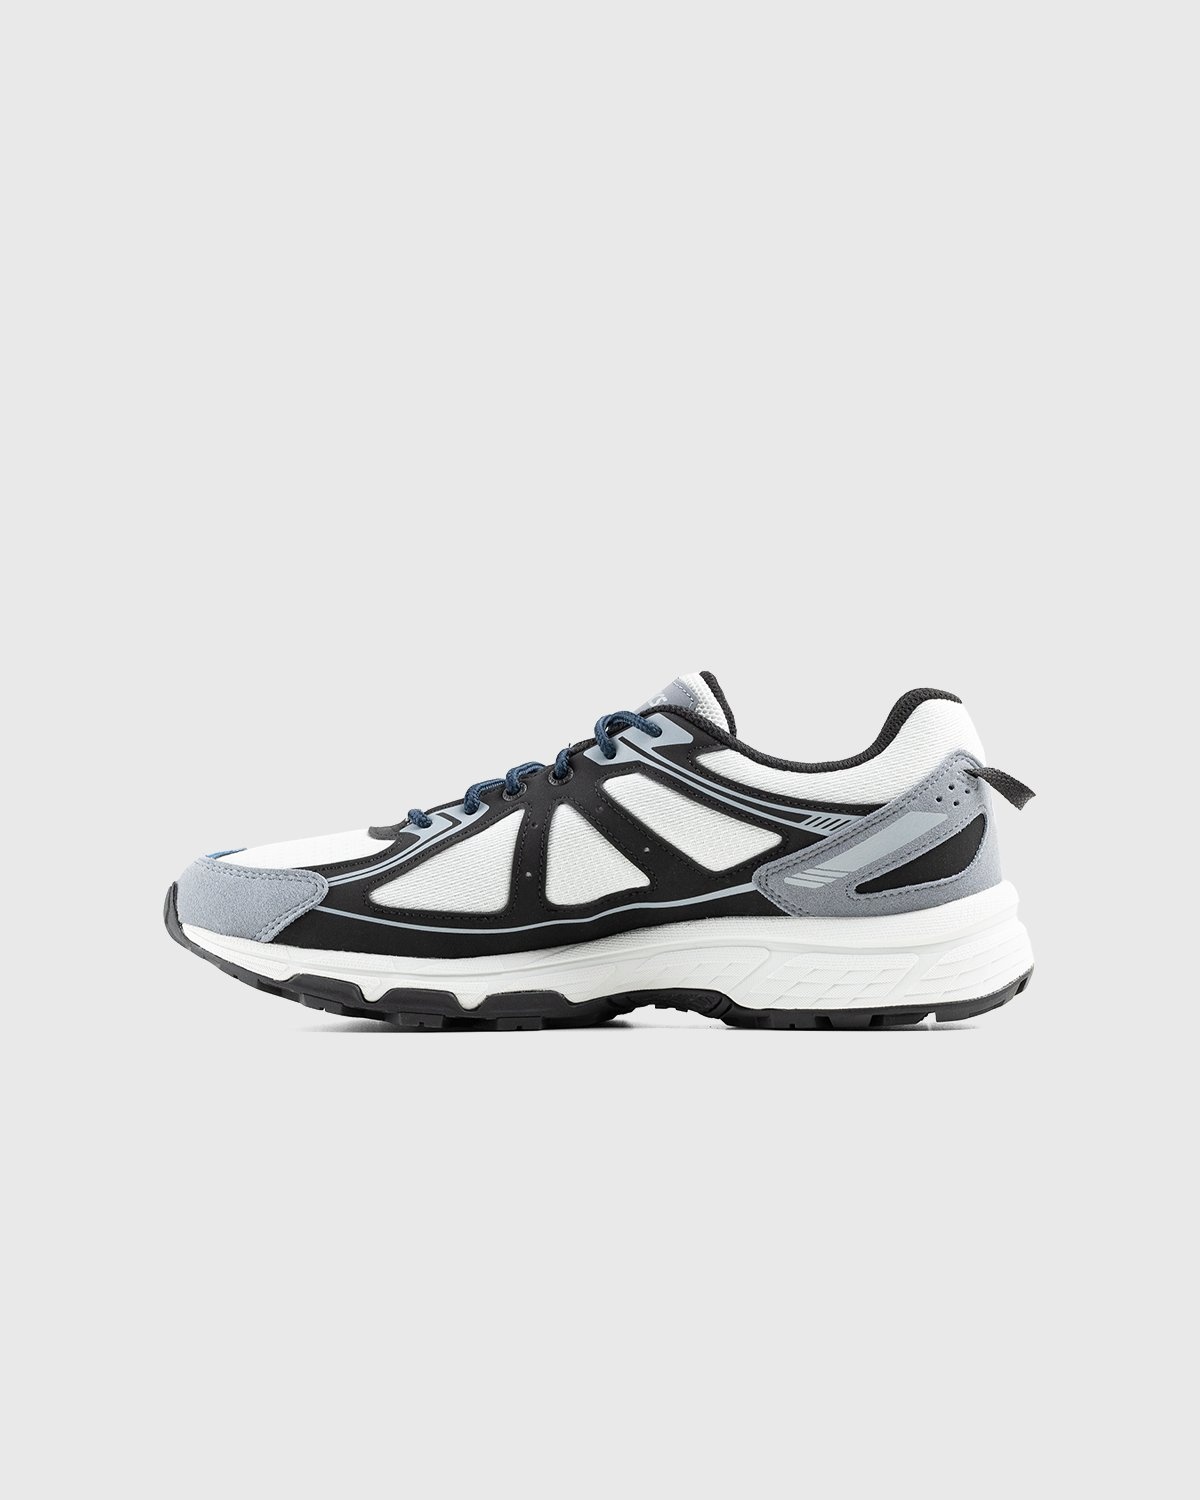 asics – Gel-Venture 6 Glacier Grey Black - Sneakers - Grey - Image 2